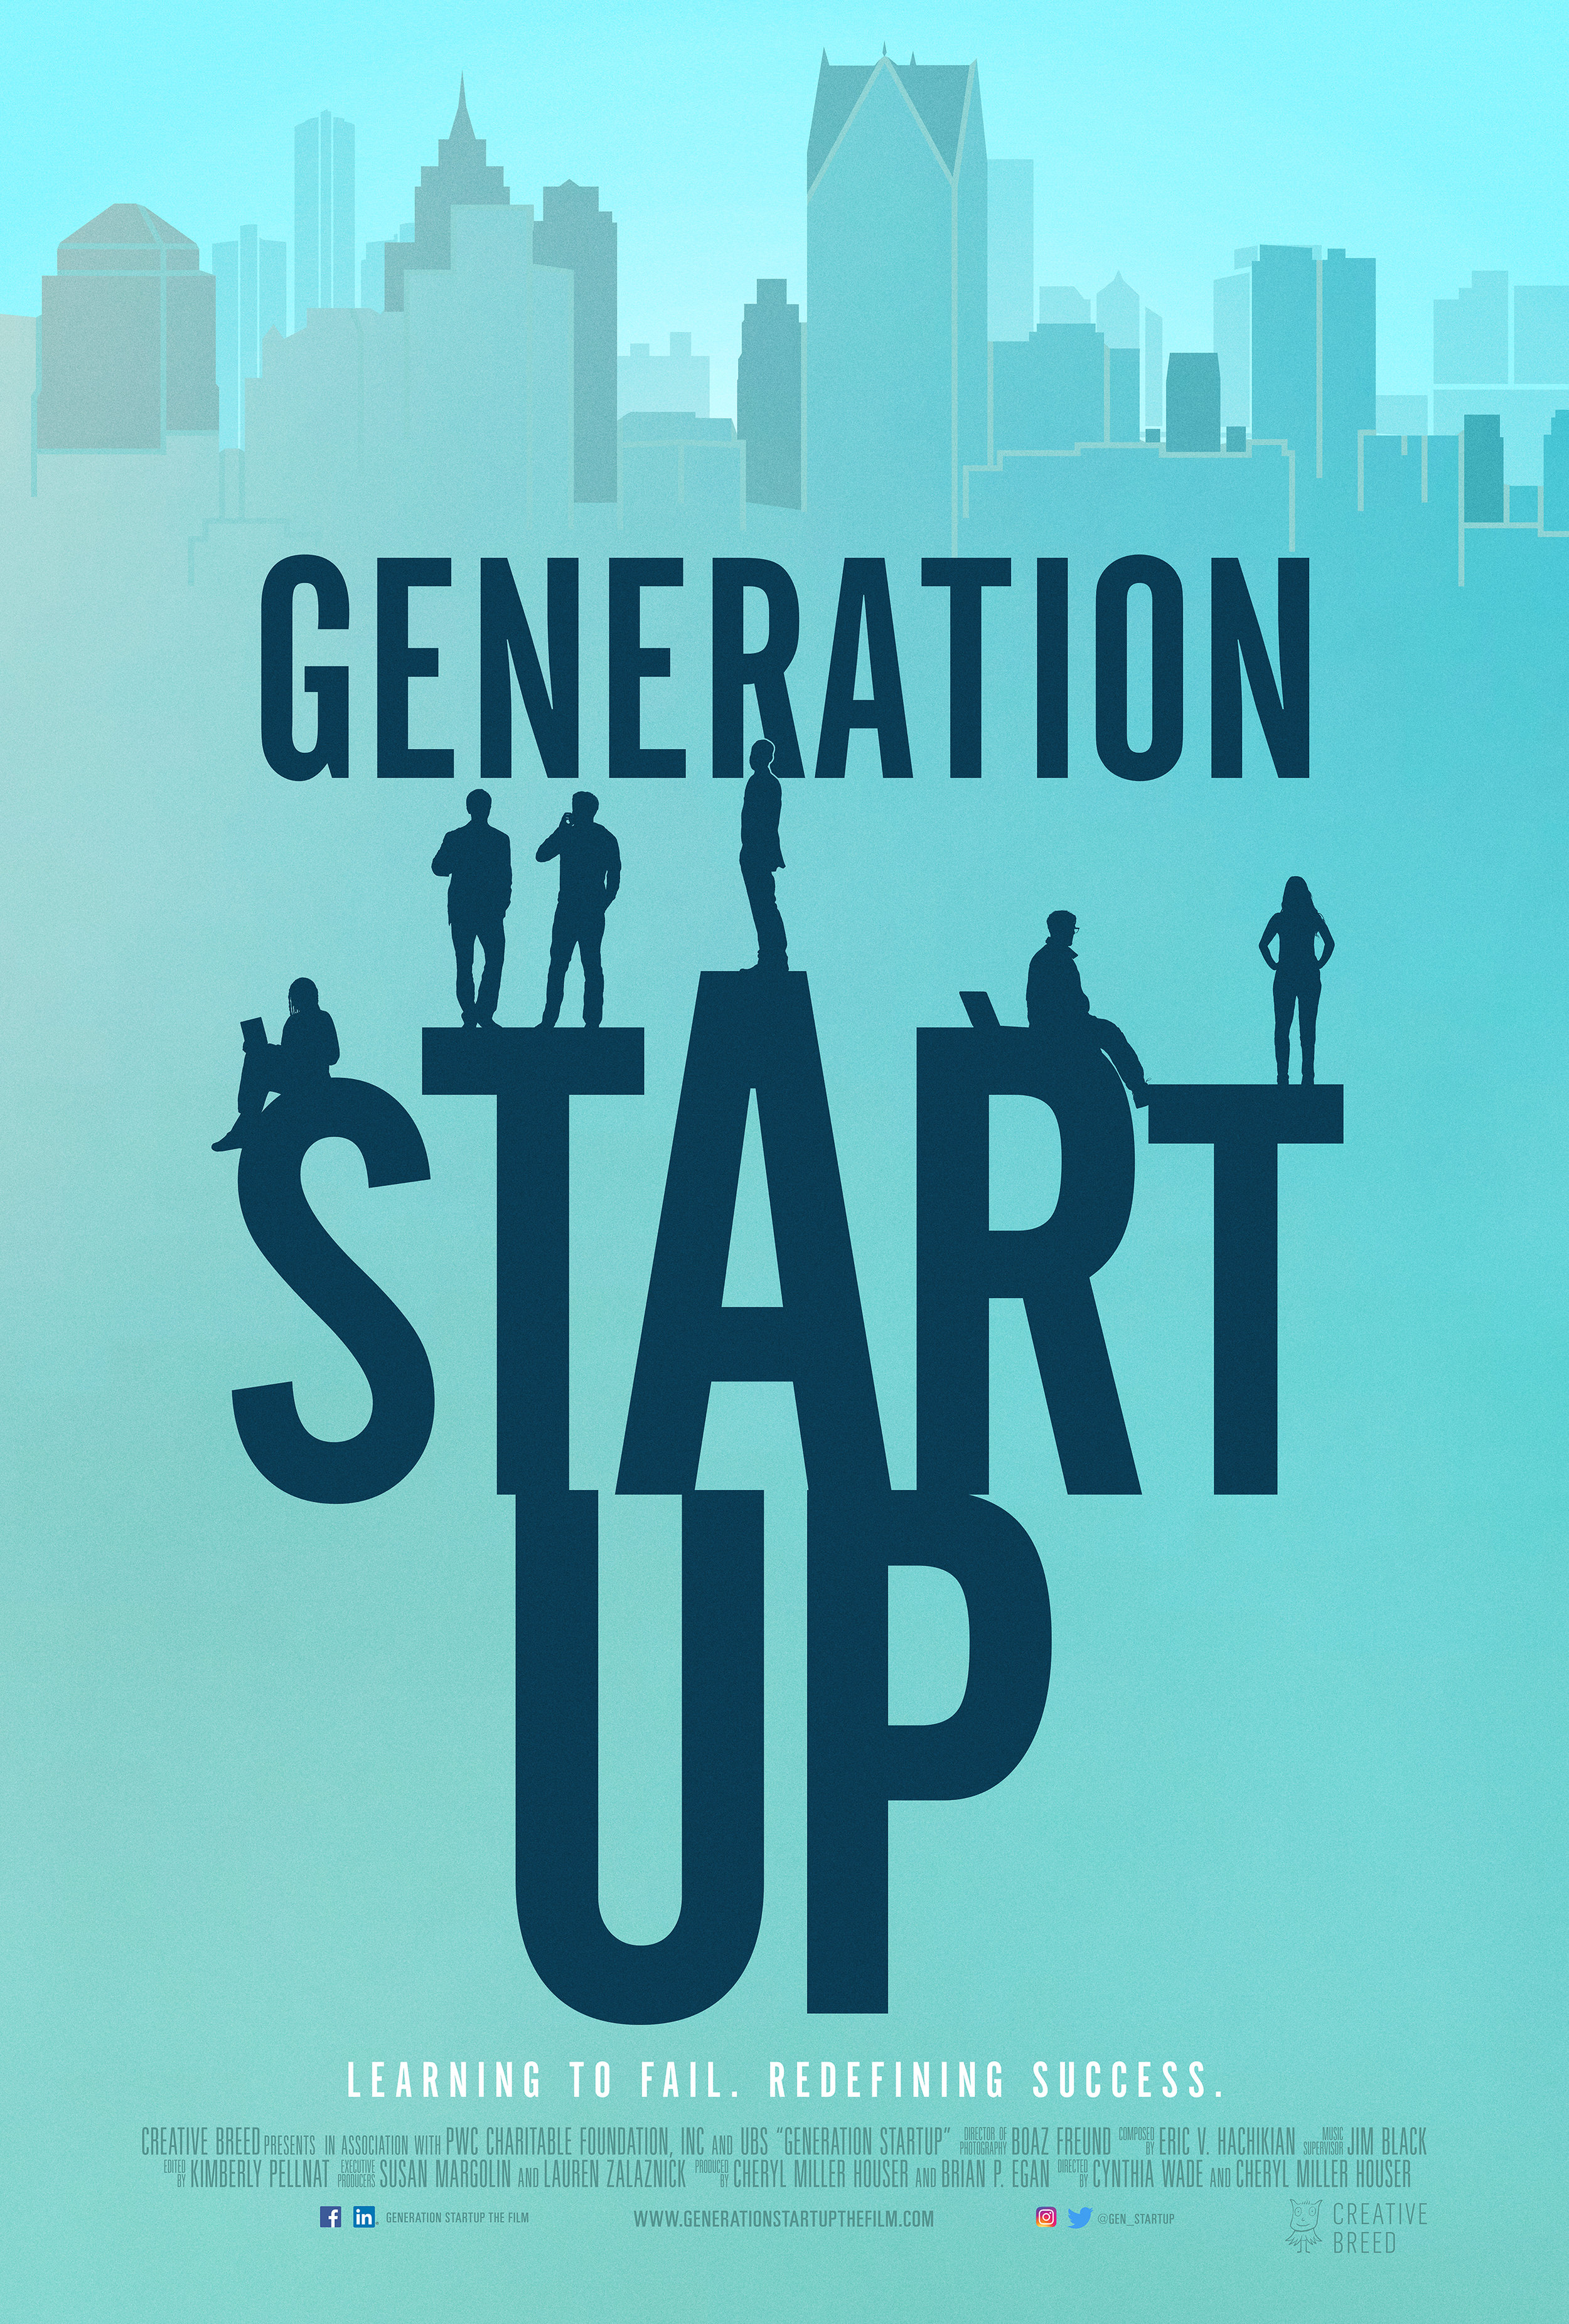 General start. Стартап. Generations стартап. Постер стартапа.